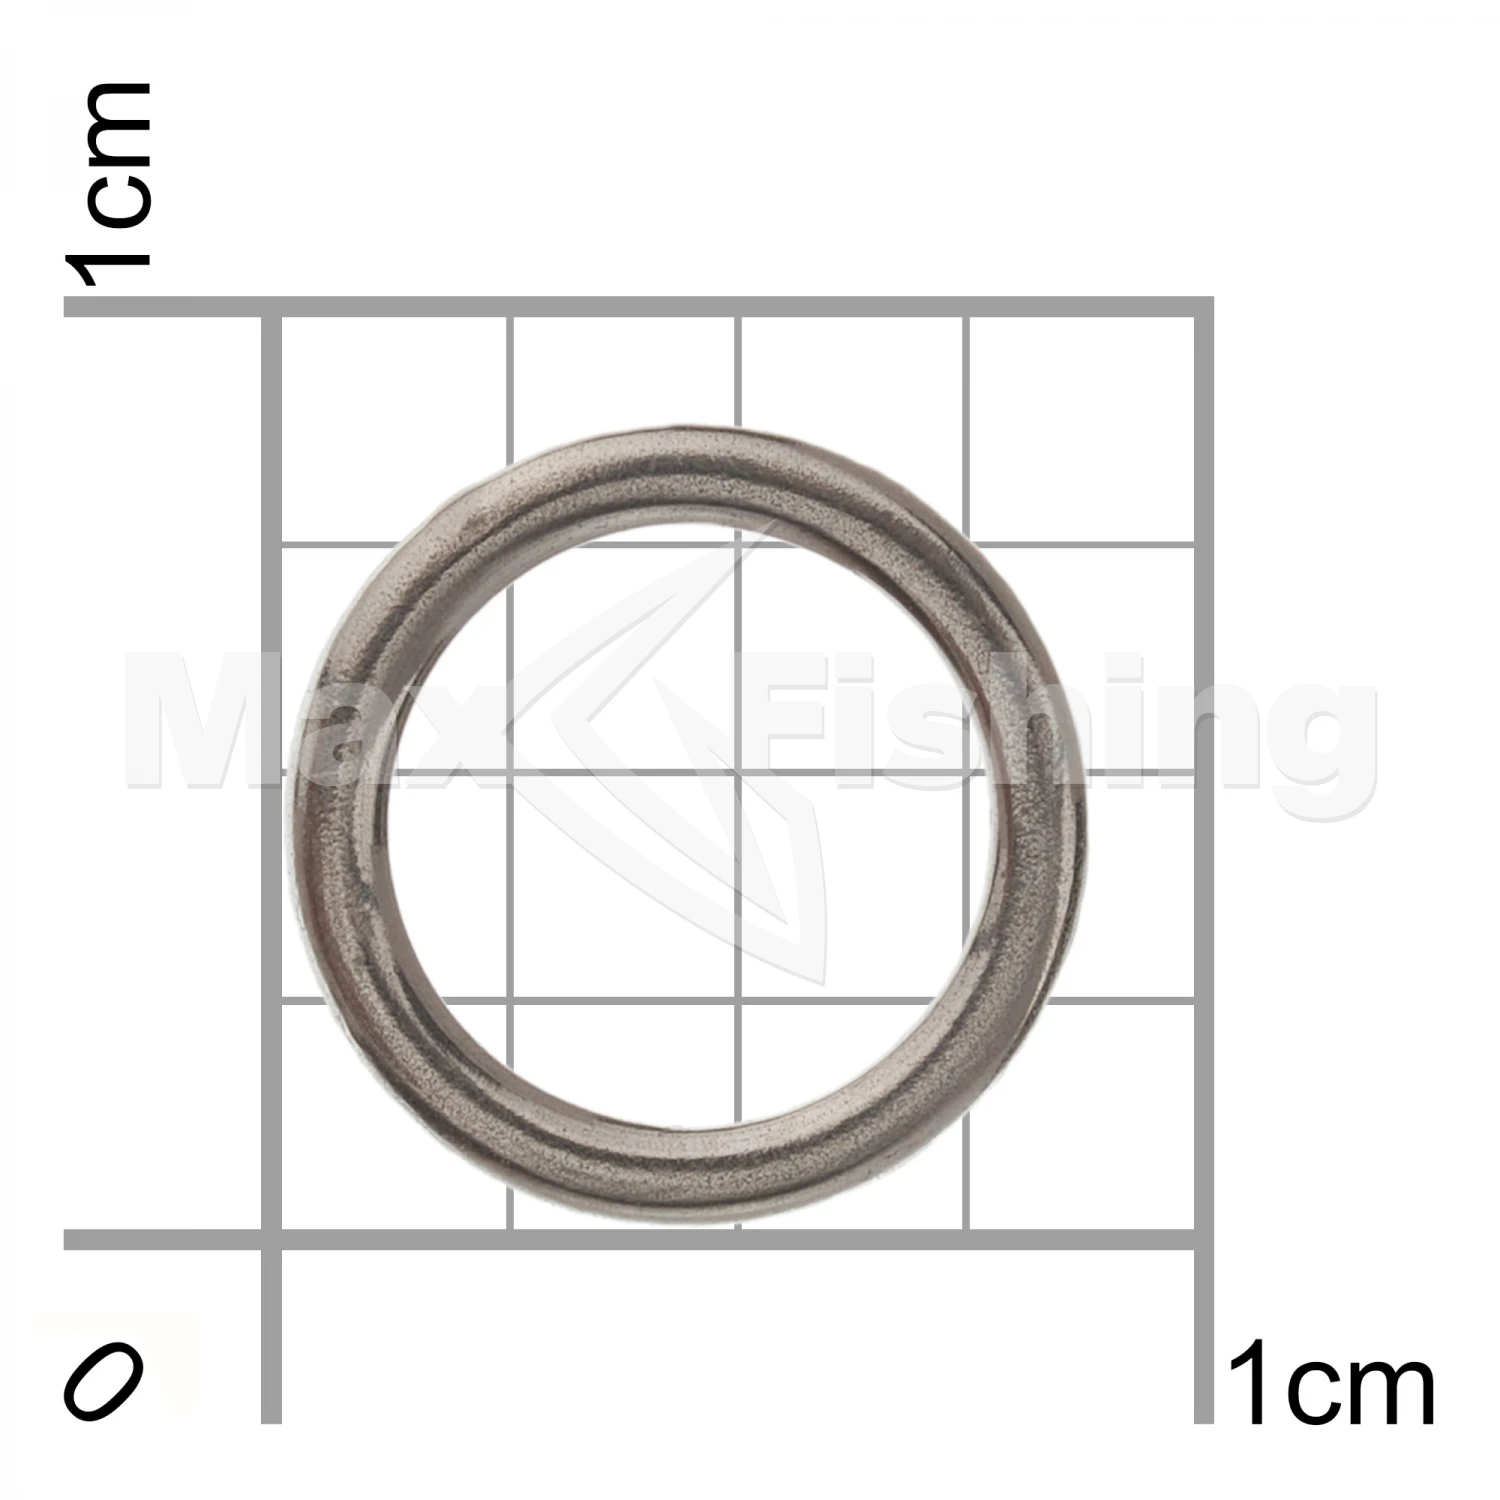 Кольцо заводное Hearty Rise Solid Ring SR-10 #6